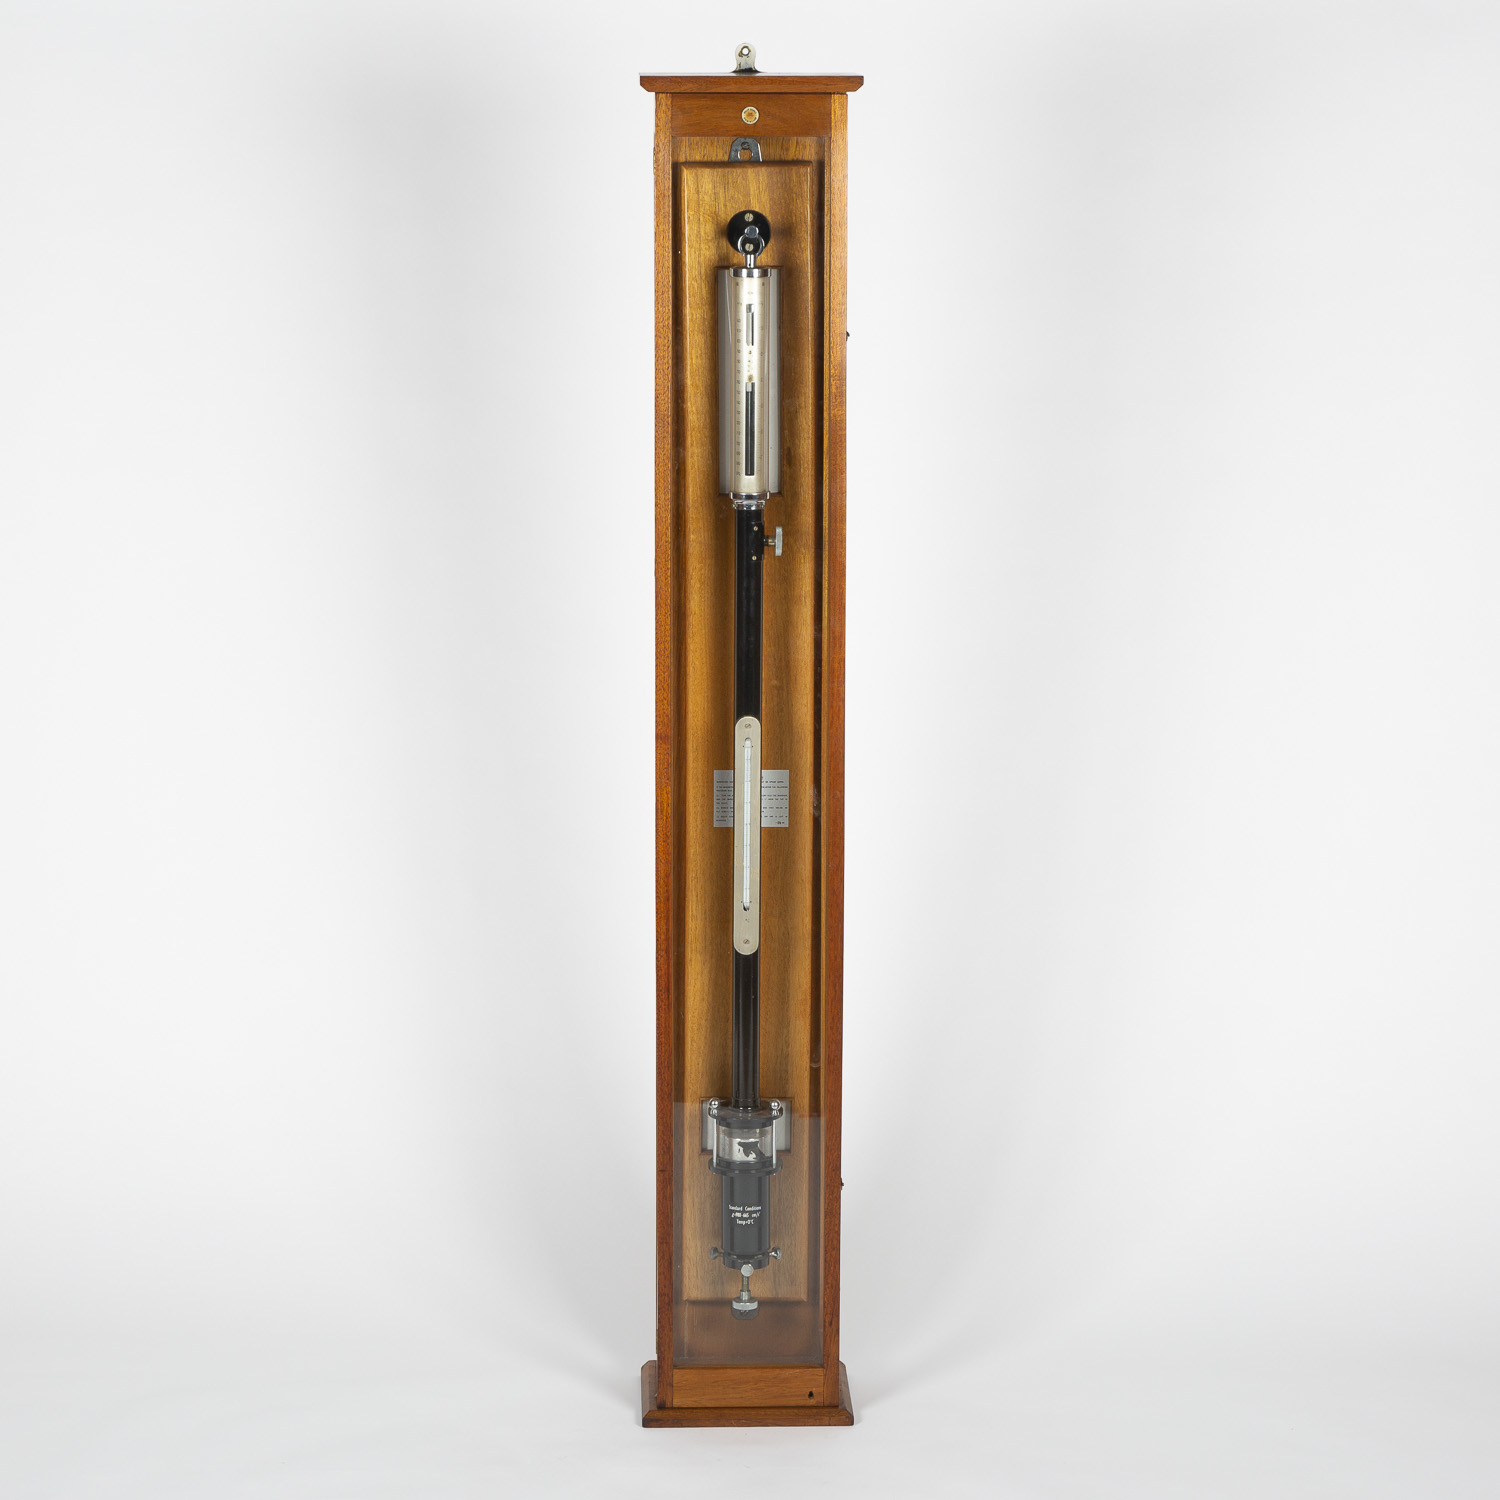 Fortin type barometer by Philip Harris Ltd, circa 1950.